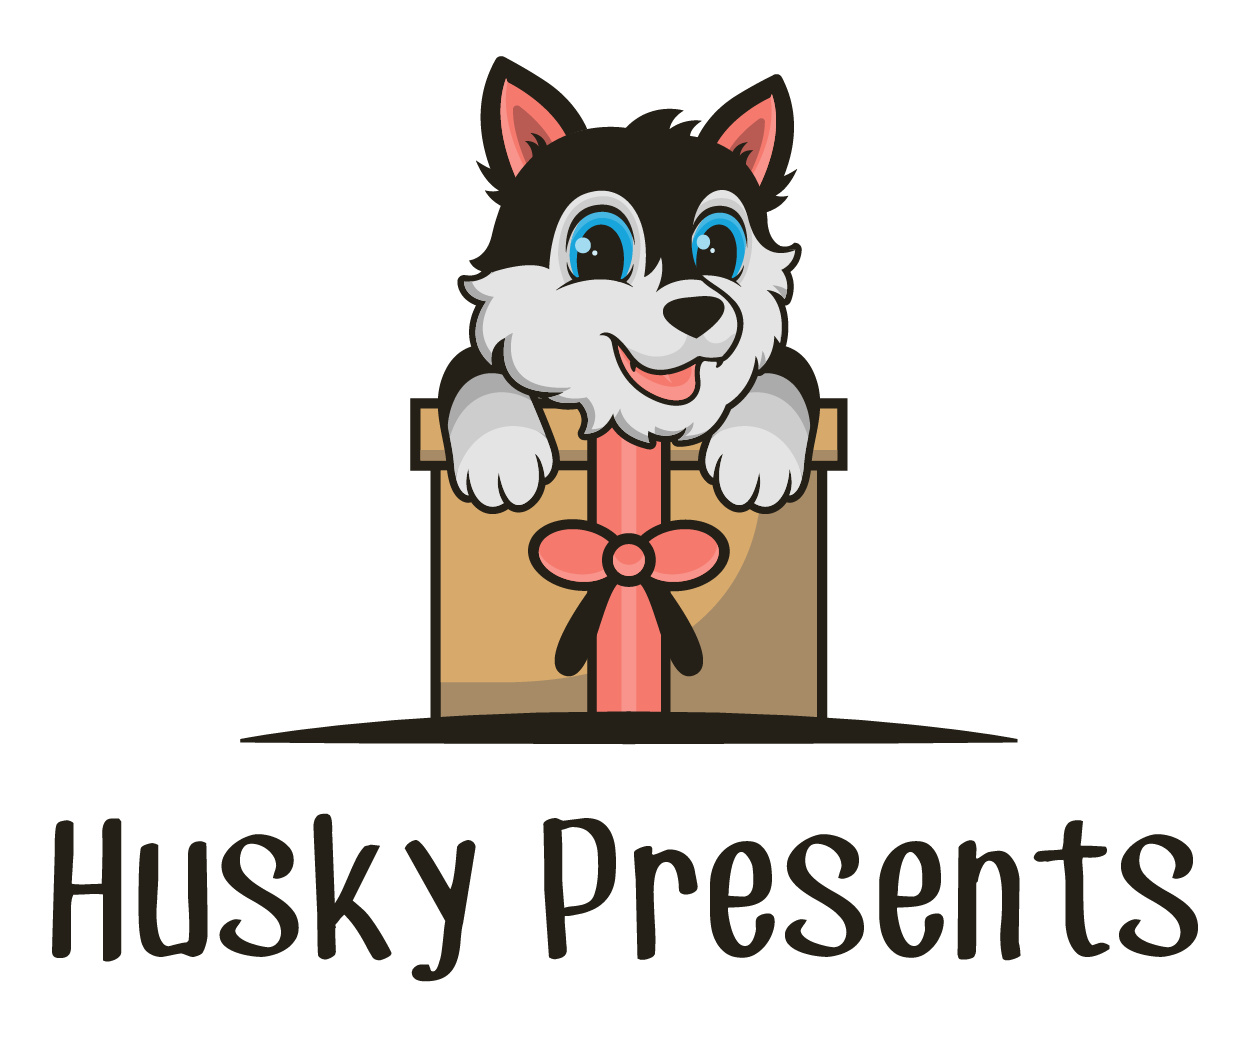 Husky Gifts